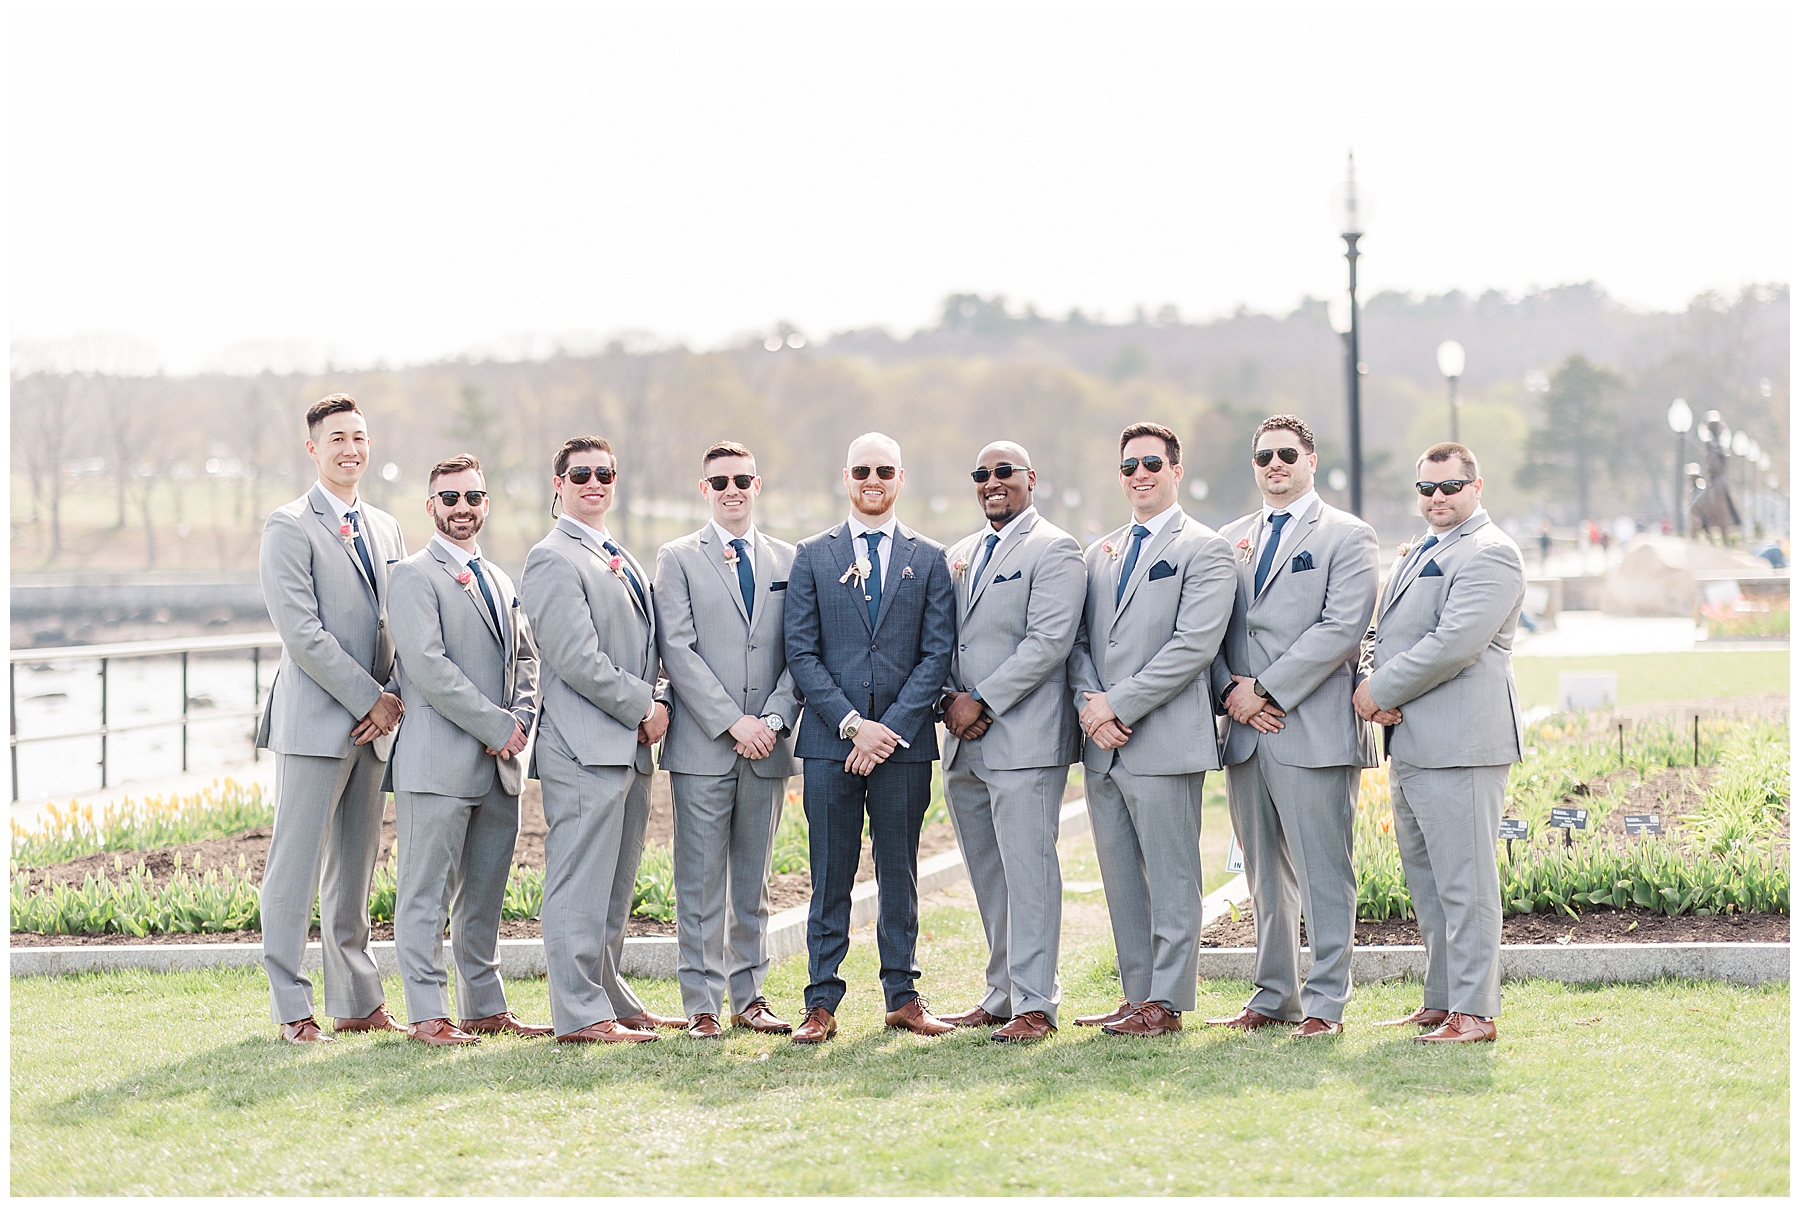 Groomsmen stand with groom wearing matching black sunglasses